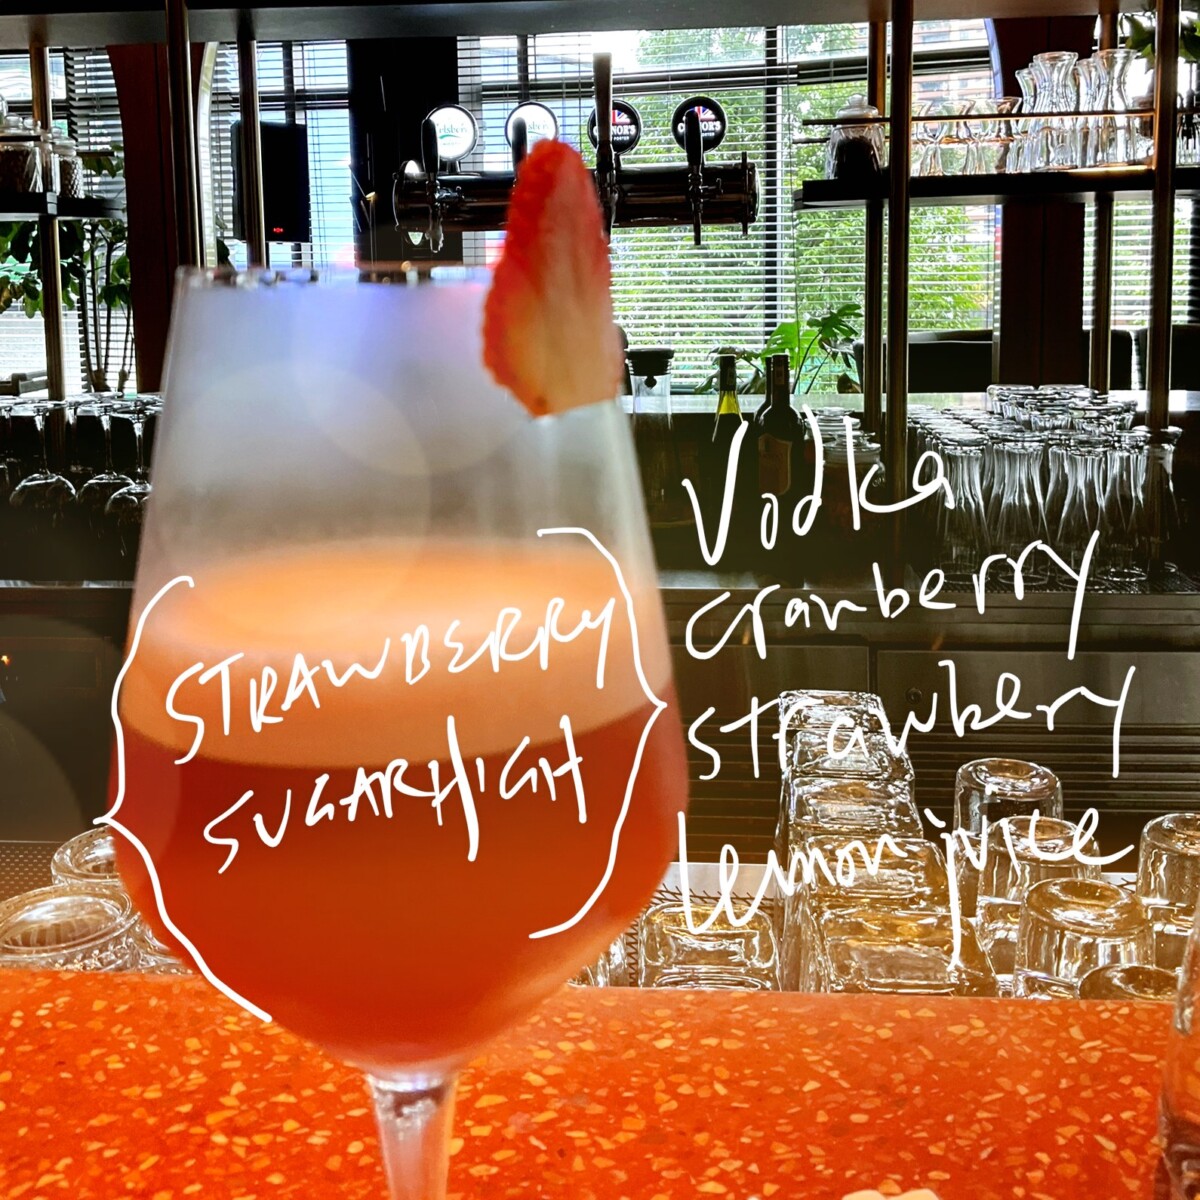 Strawberry Sugarhill botanist Bar